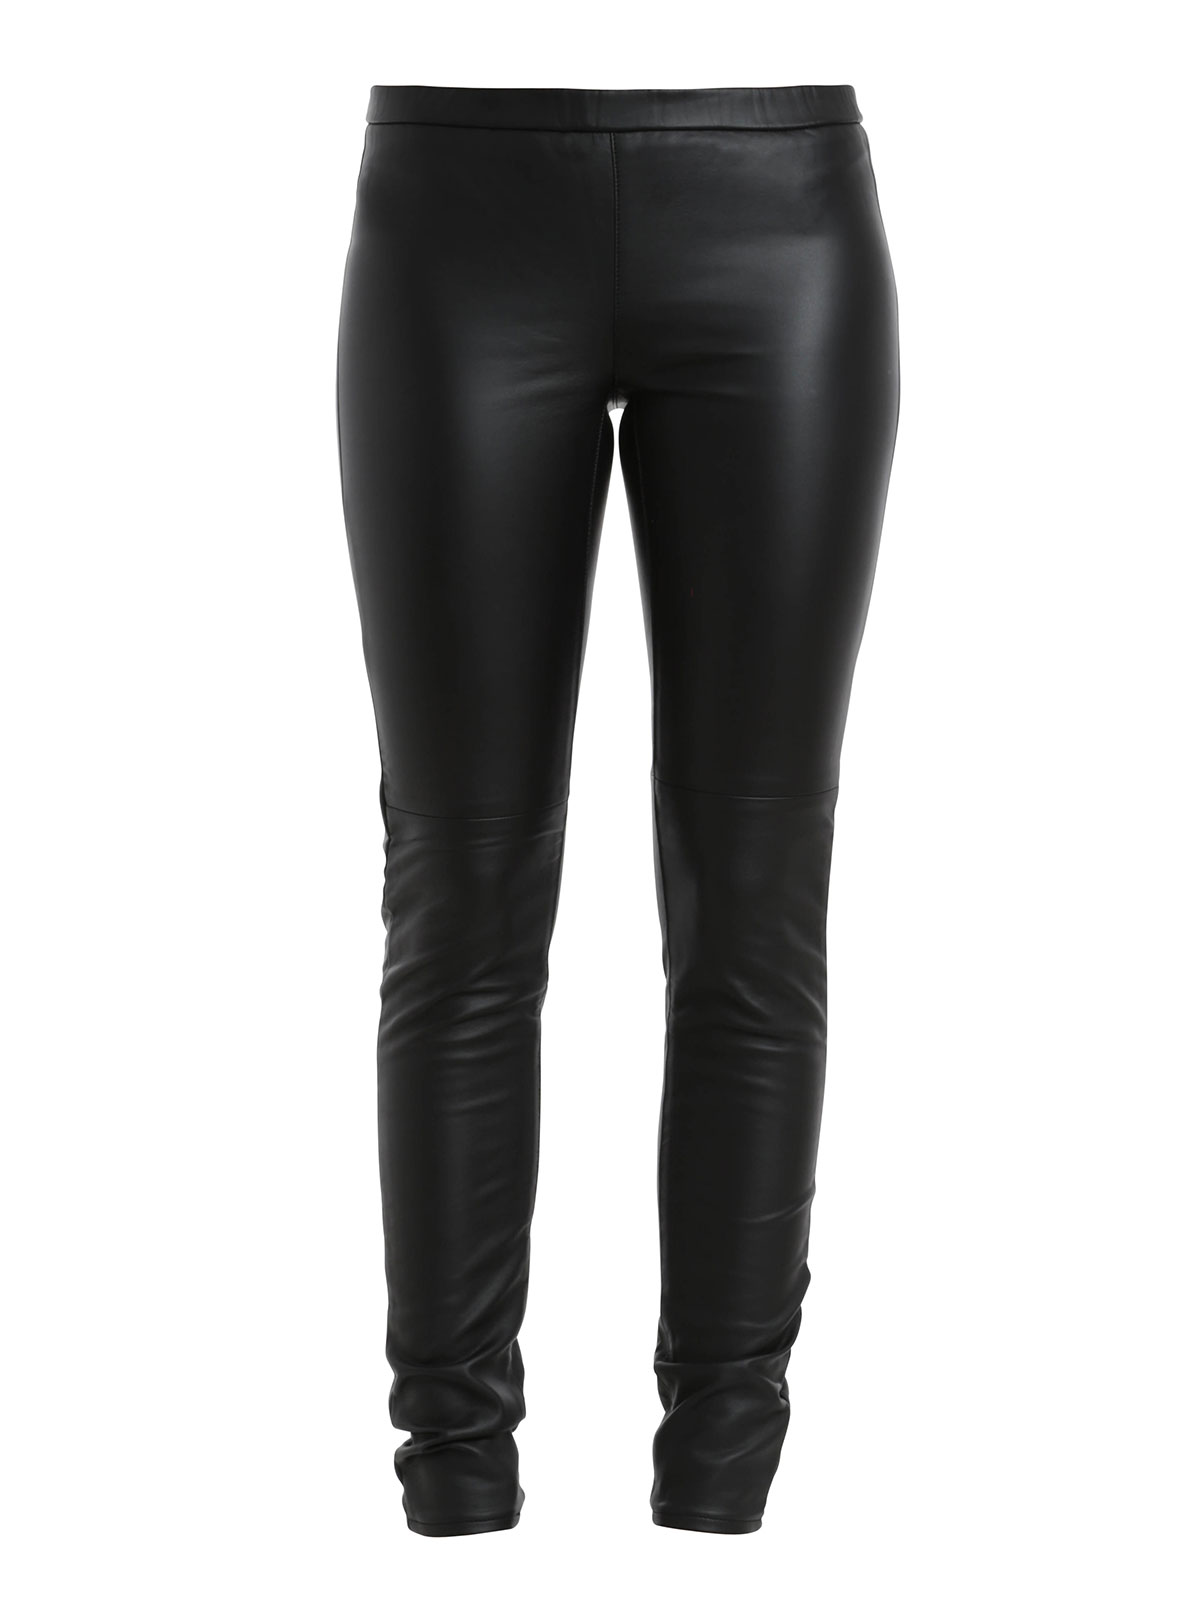 Leggings Michael Kors - Faux leather leggins - MU5335318EBLACK | iKRIX.com